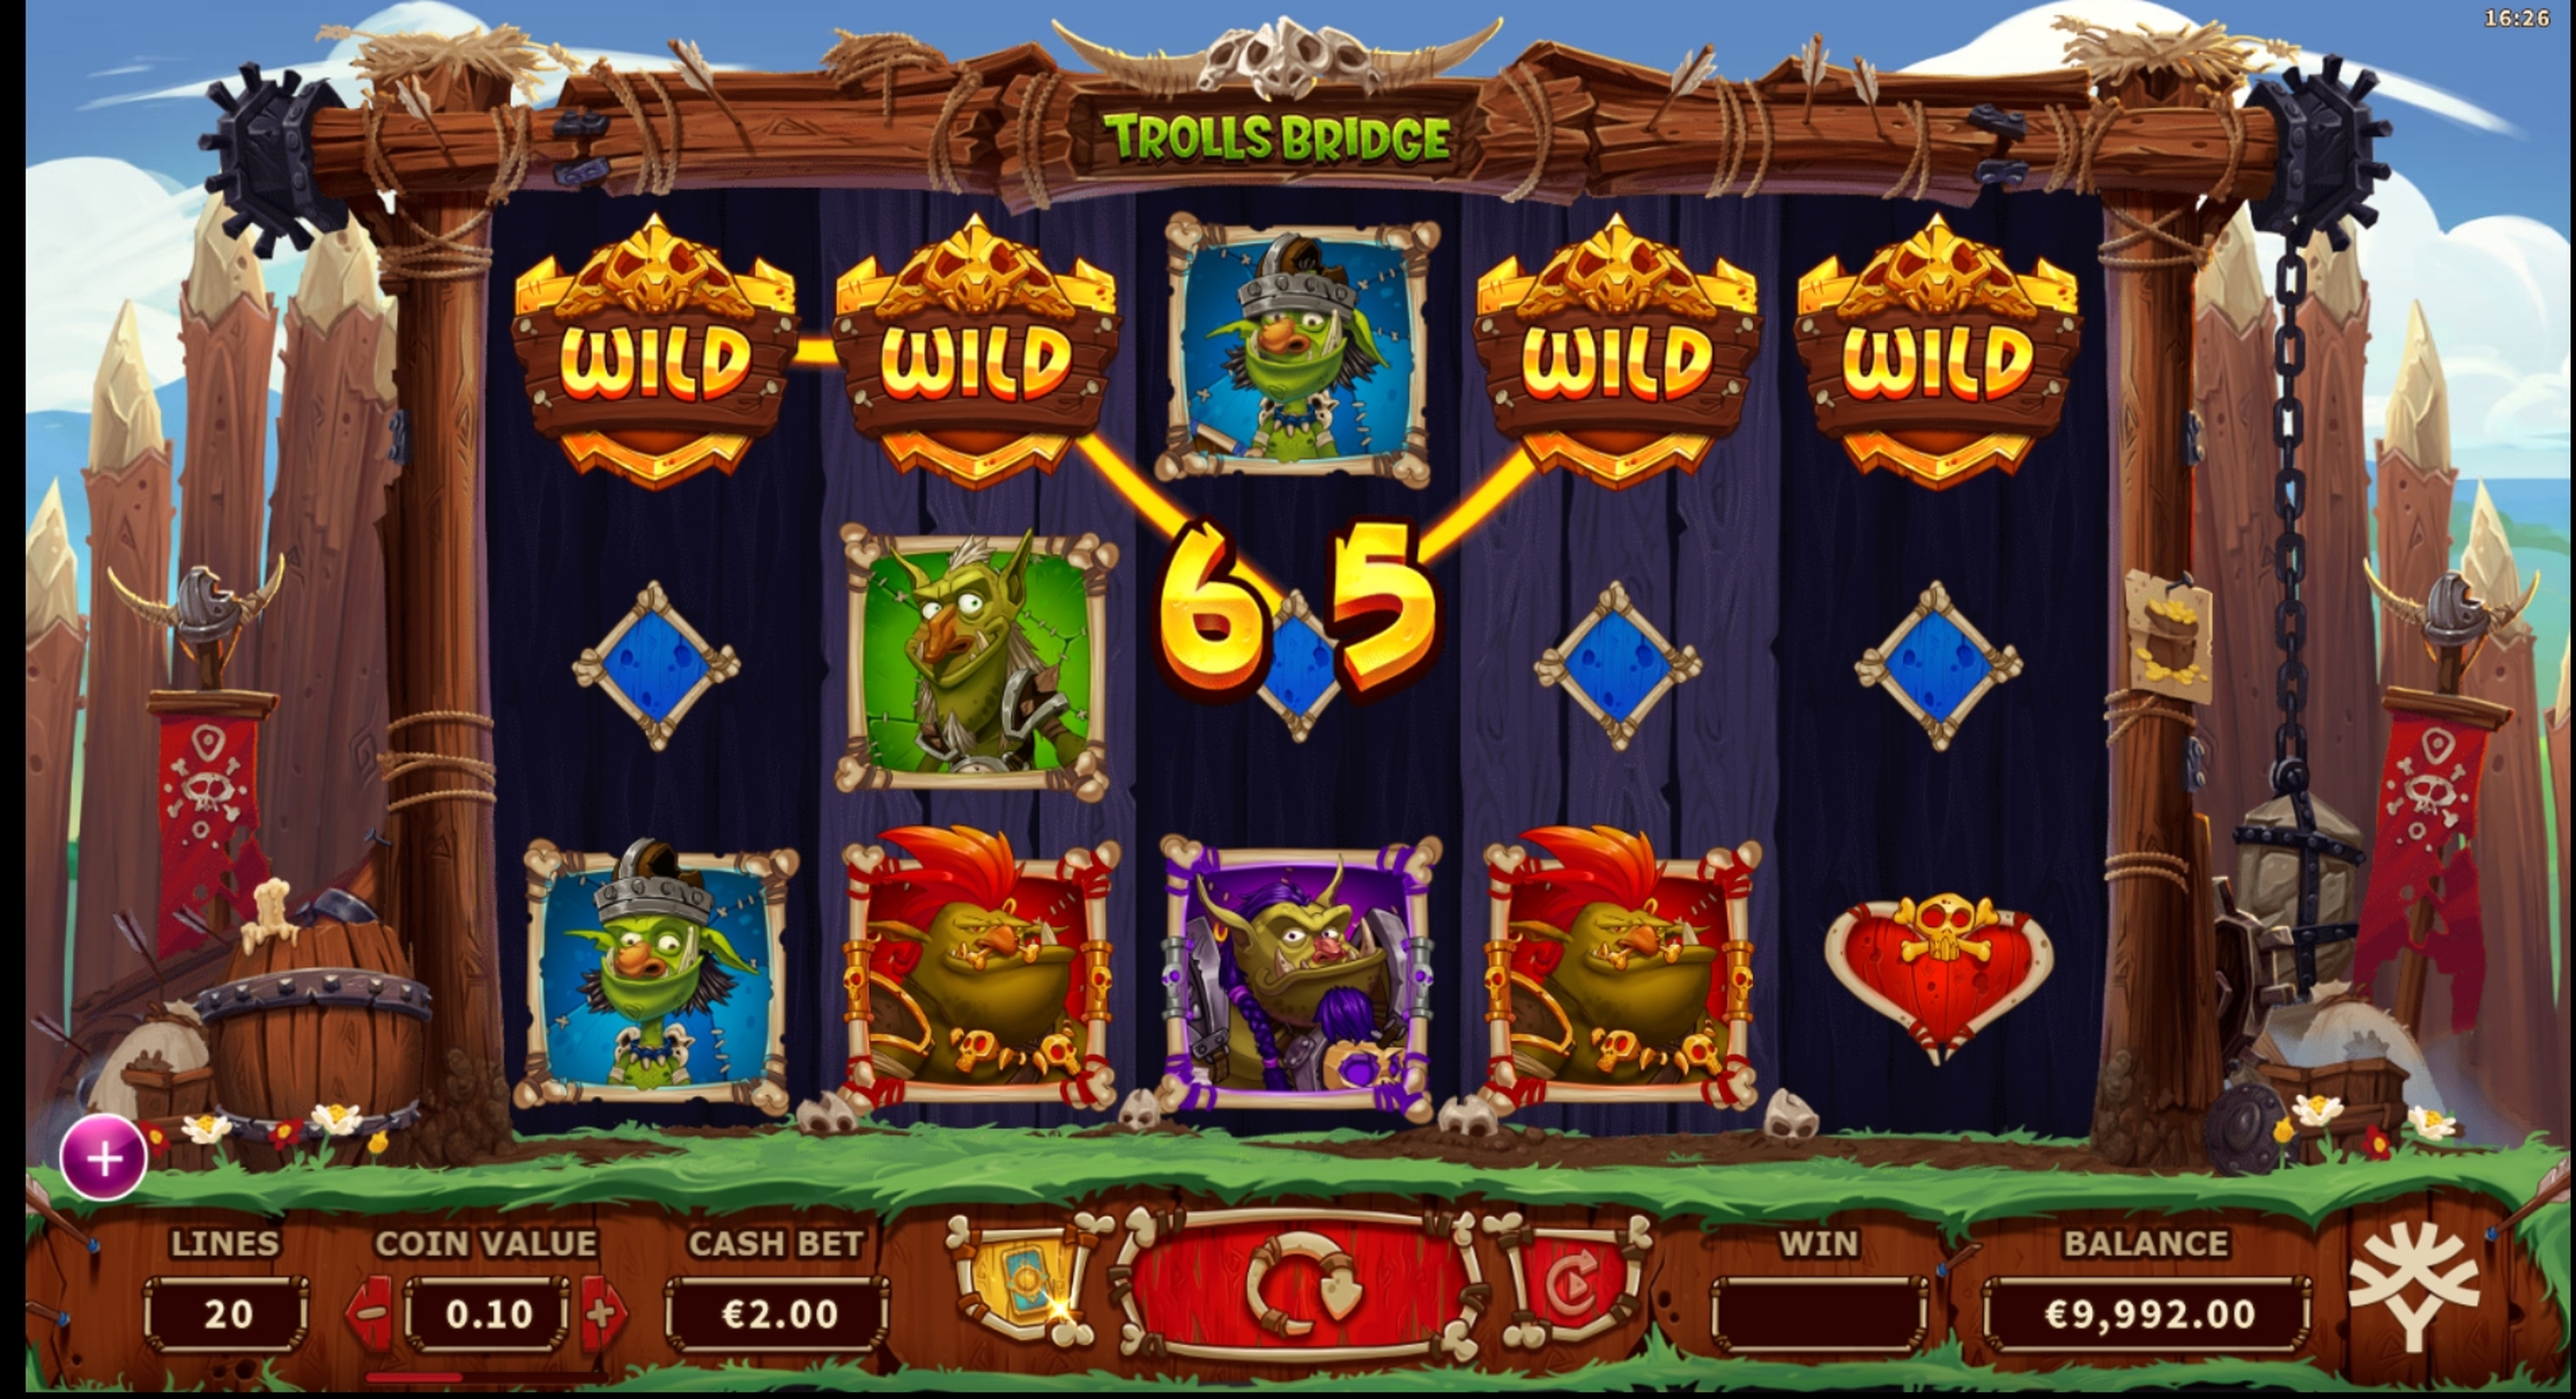 Win Money in Trolls Bridge Free Slot Game by Yggdrasil Gaming